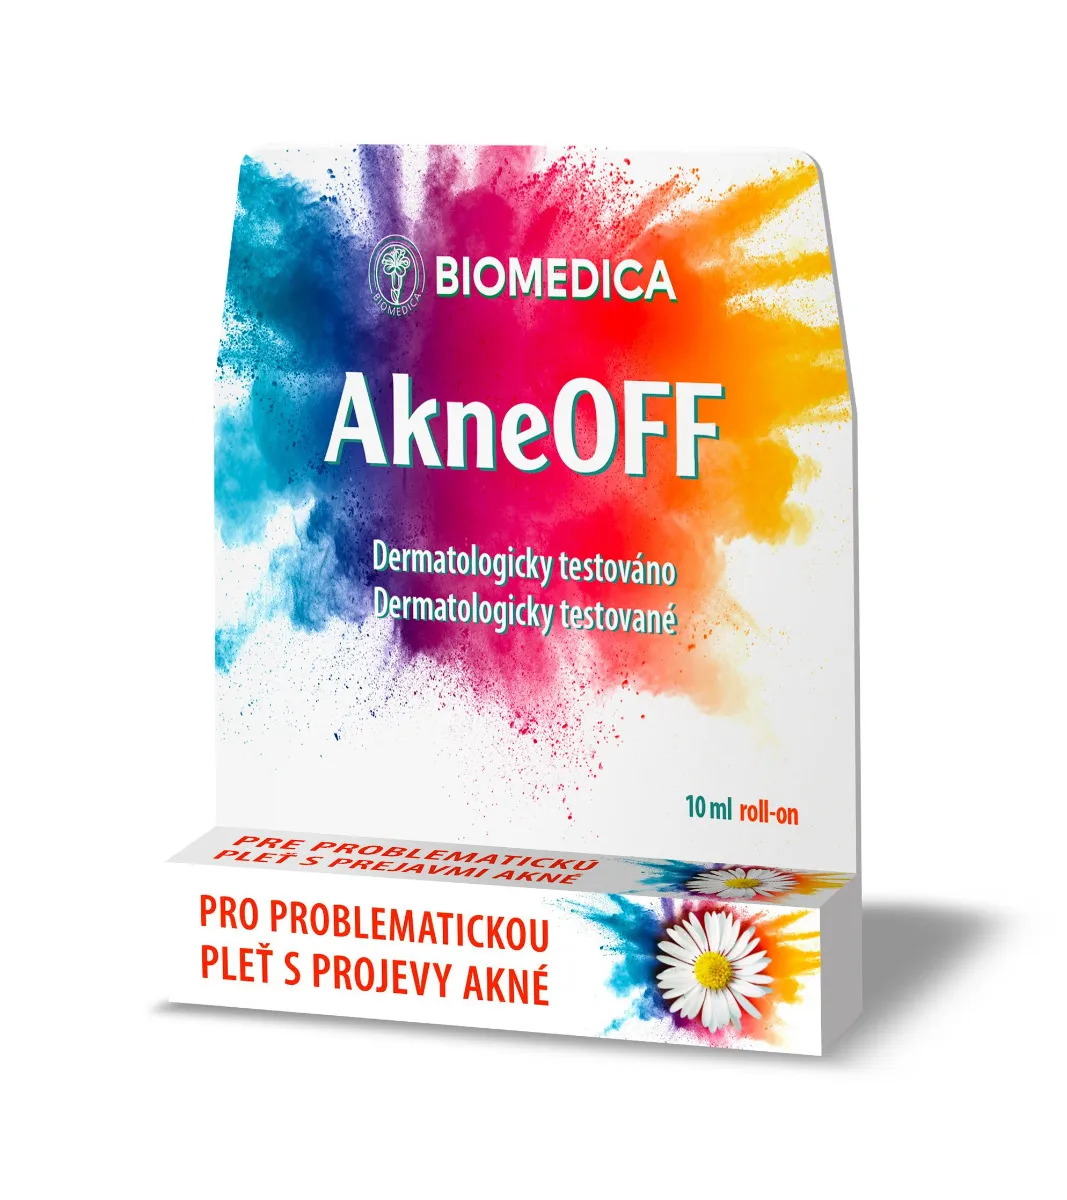 Biomedica AkneOFF